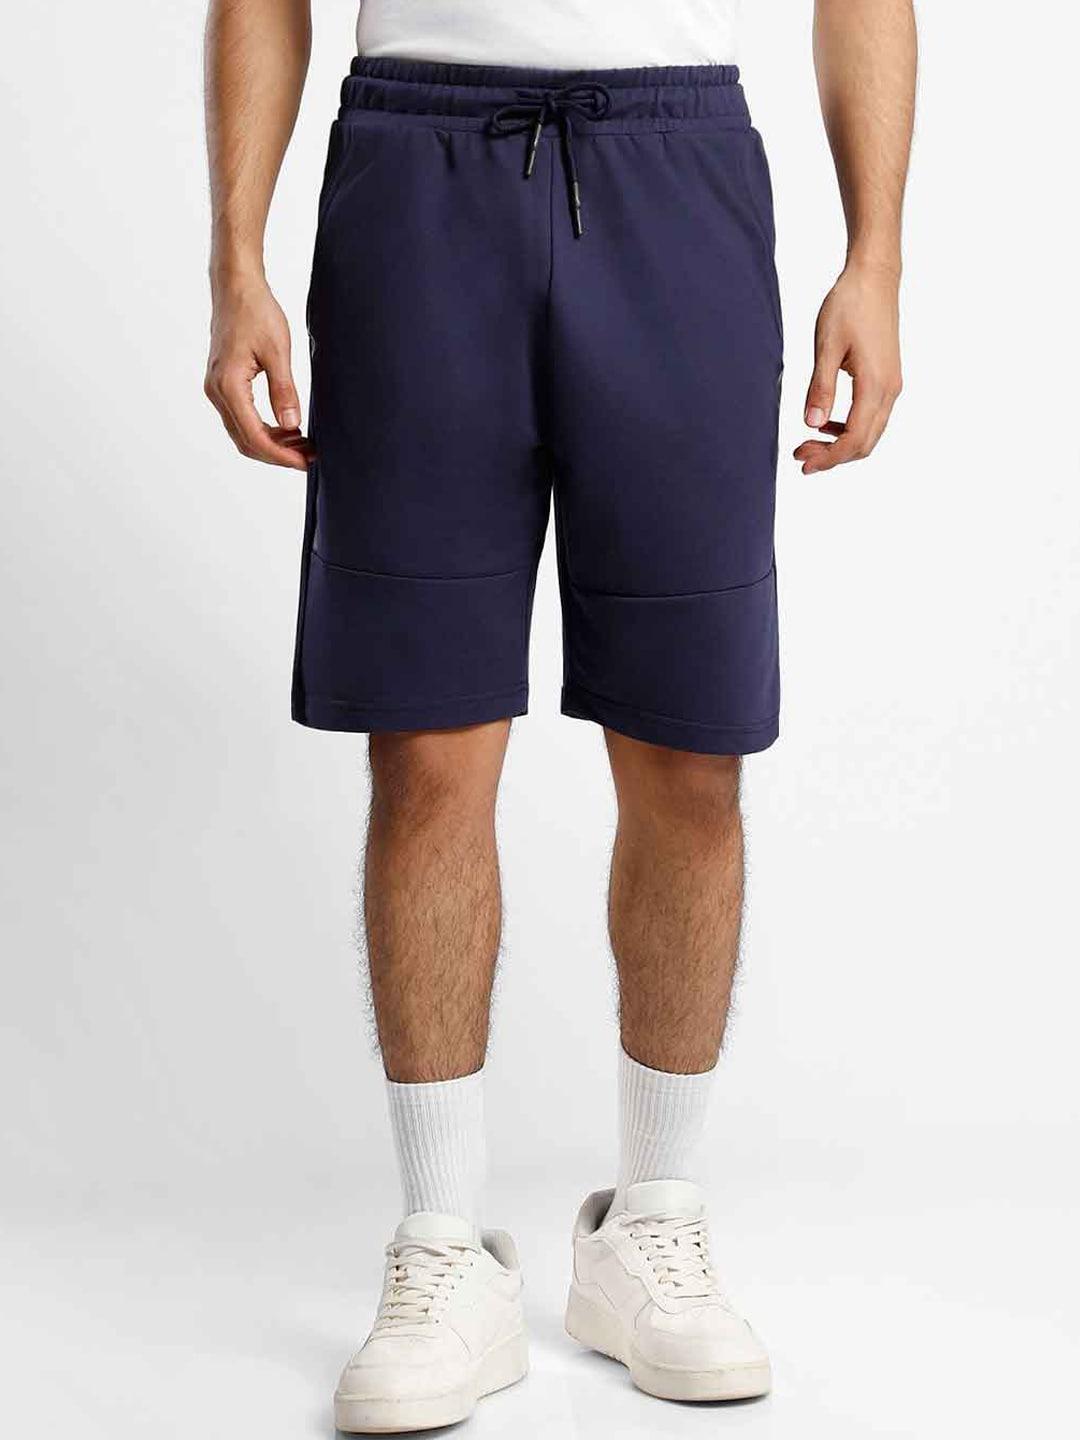 nobero men navy blue shorts